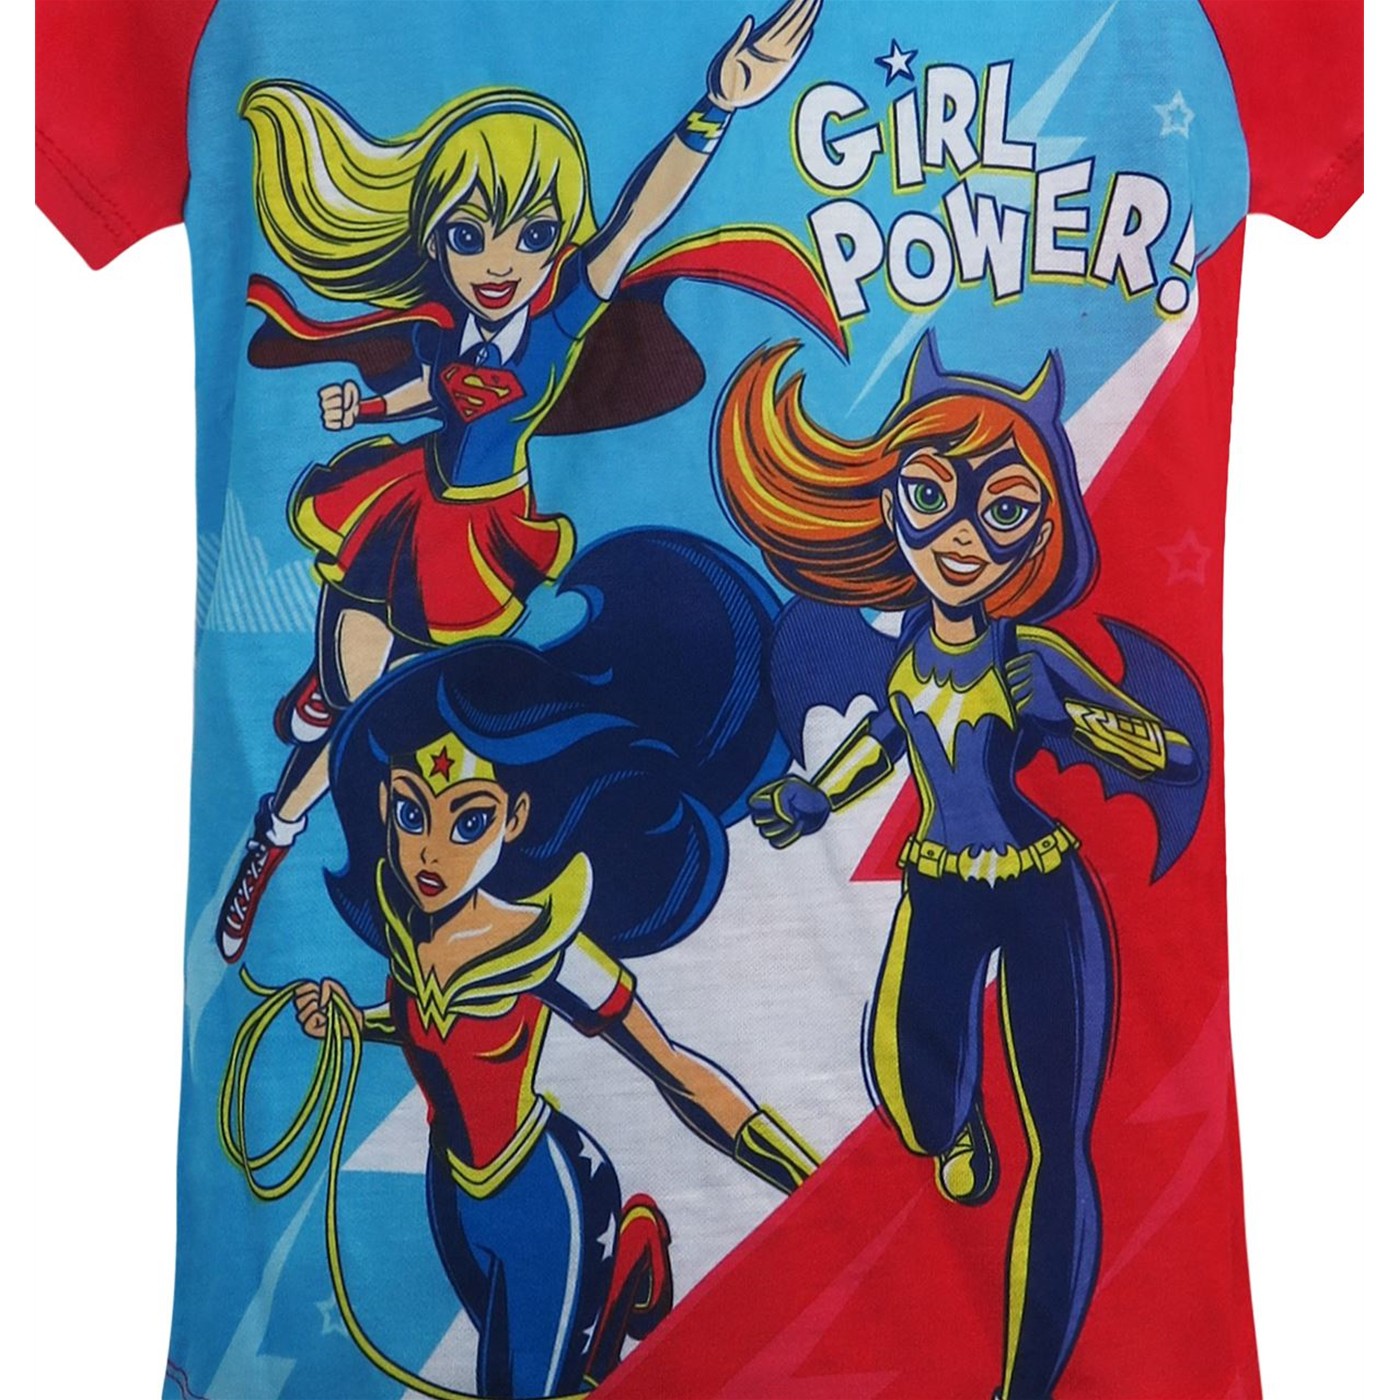 DC Superhero Girls Girl Power Juvenile Top & Short Set